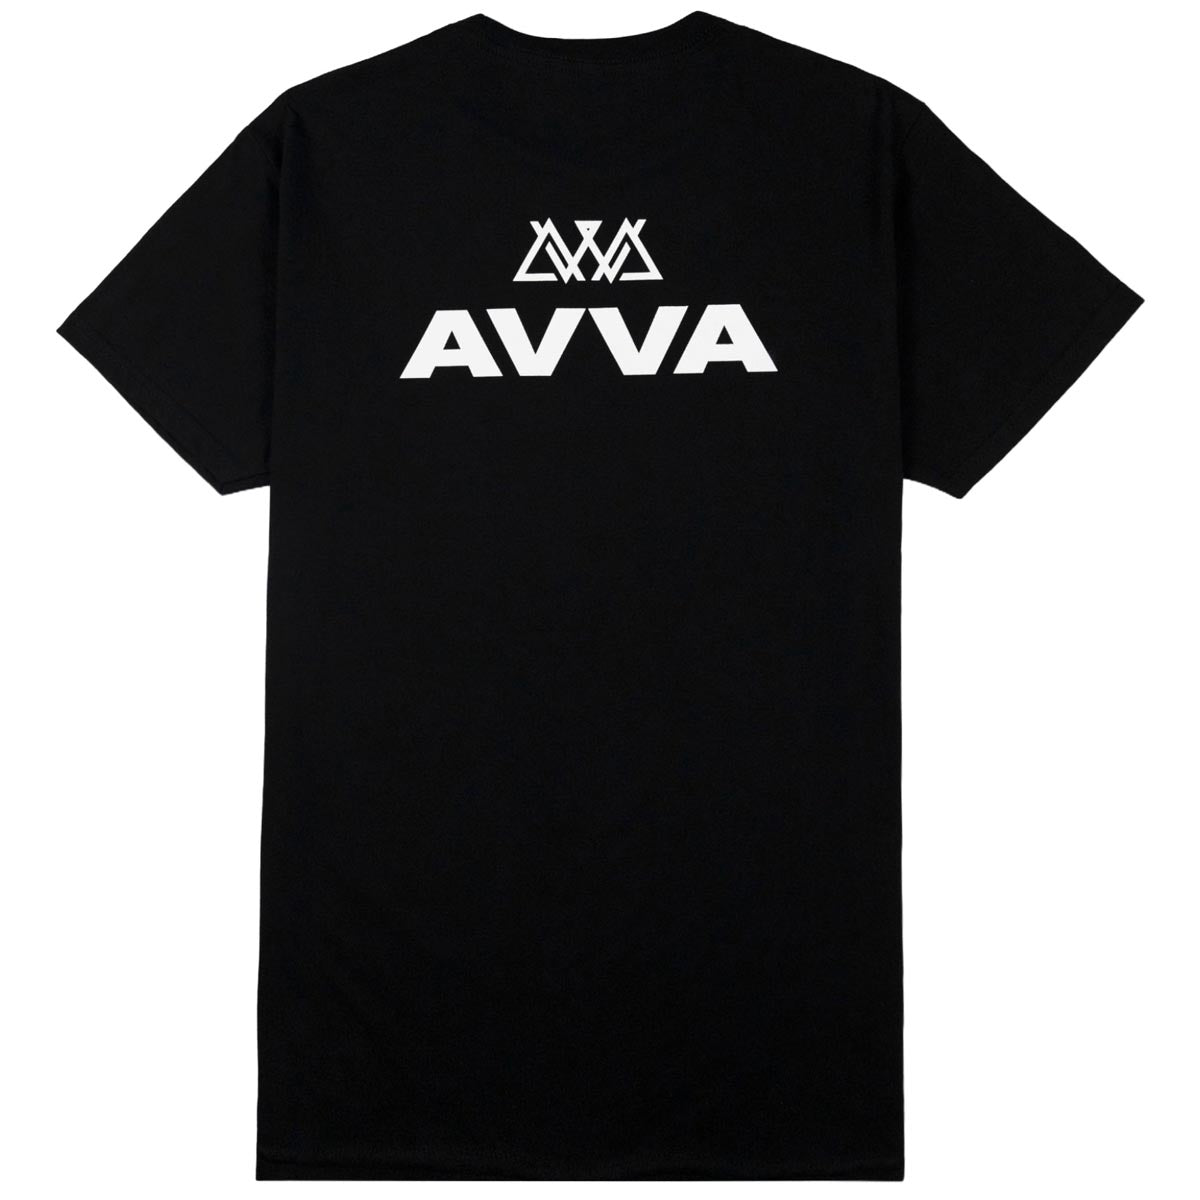 AVVA Pyramid Logo T-Shirt - Black image 1